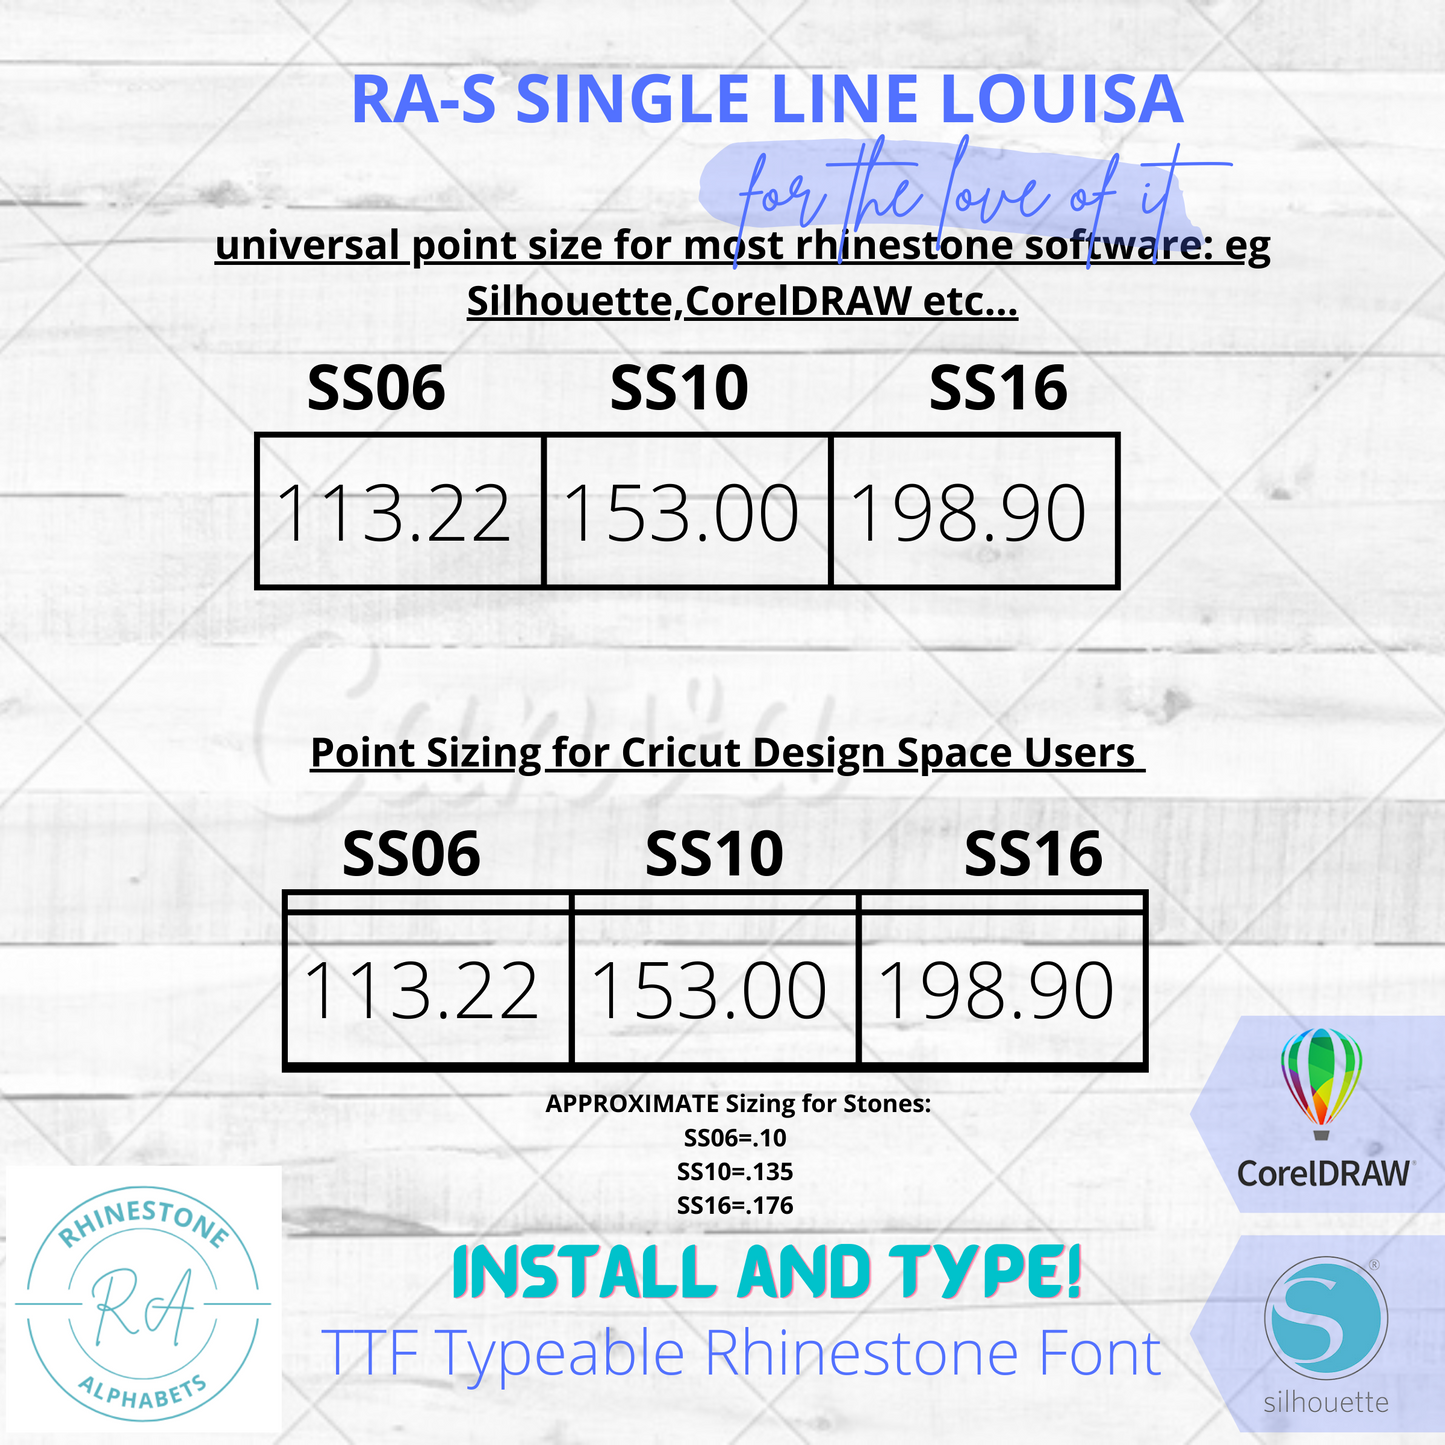 RA-S Singleline Louisa